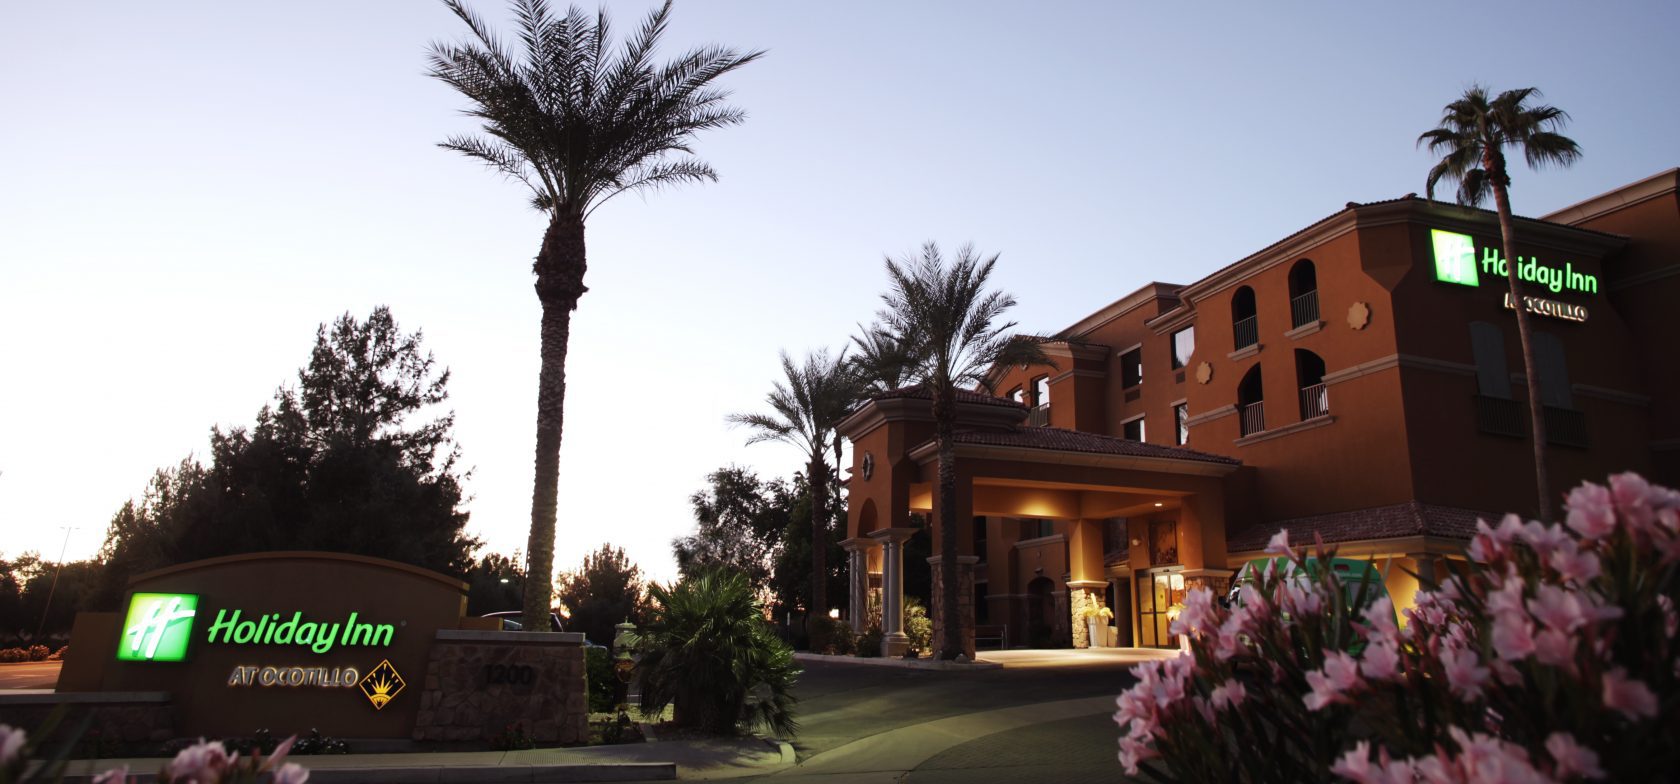 Photo of Holiday Inn Phoenix Chandler, Chandler, AZ